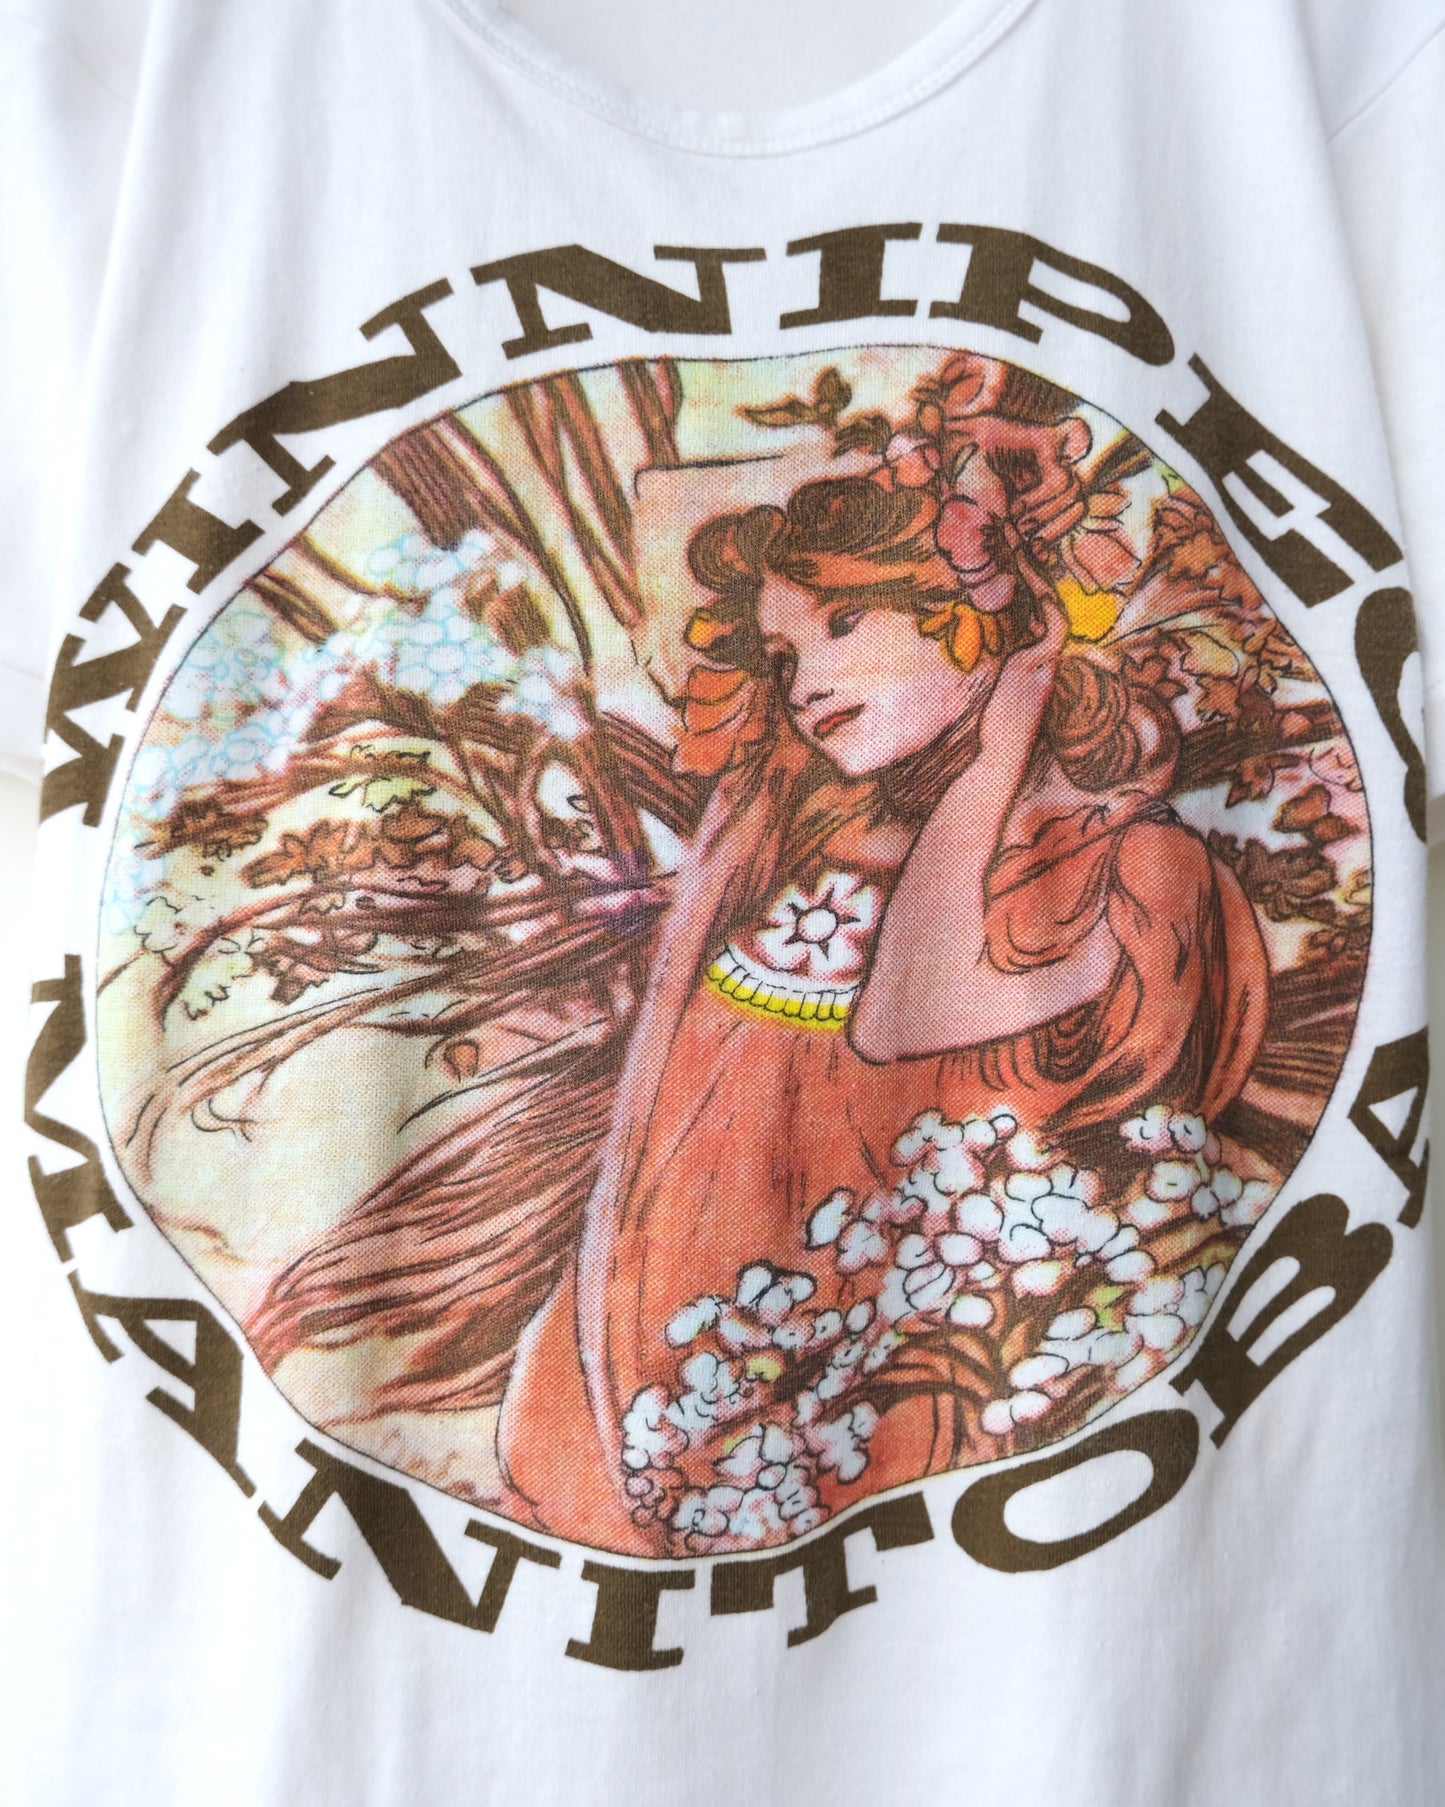 70's Art Printed T-Shirt